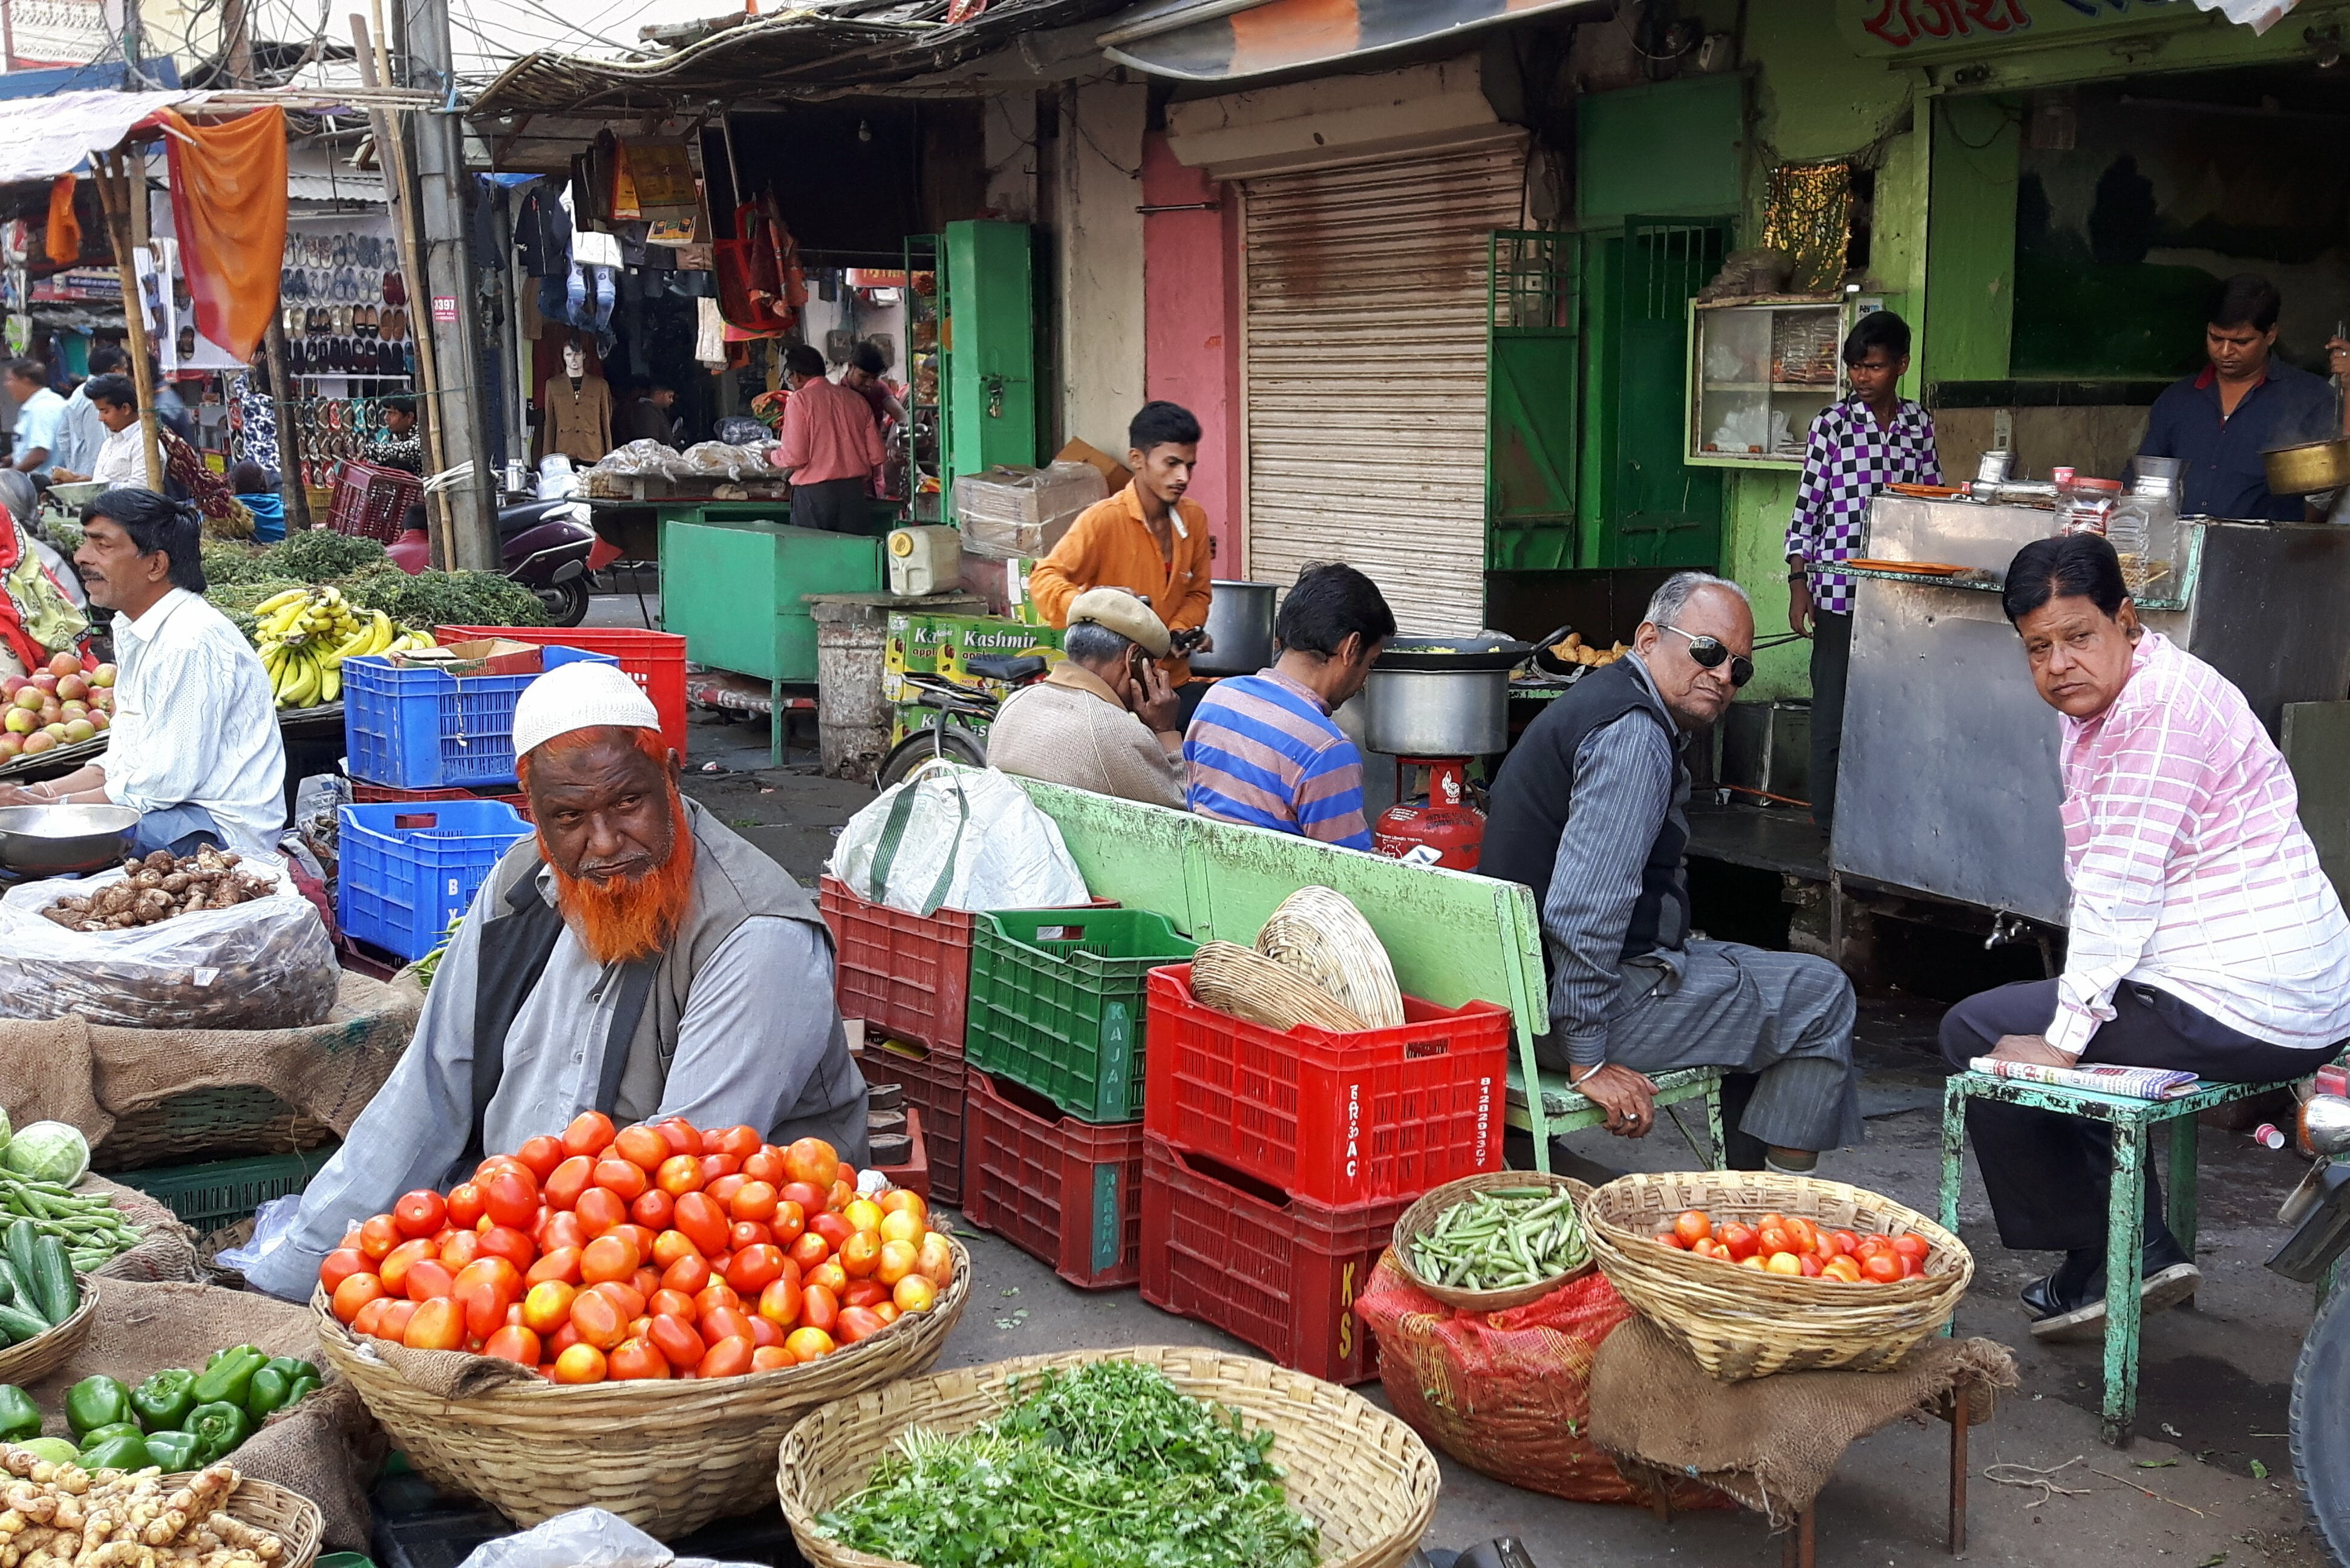 The vegetable market in Udaipur, Rajasthan